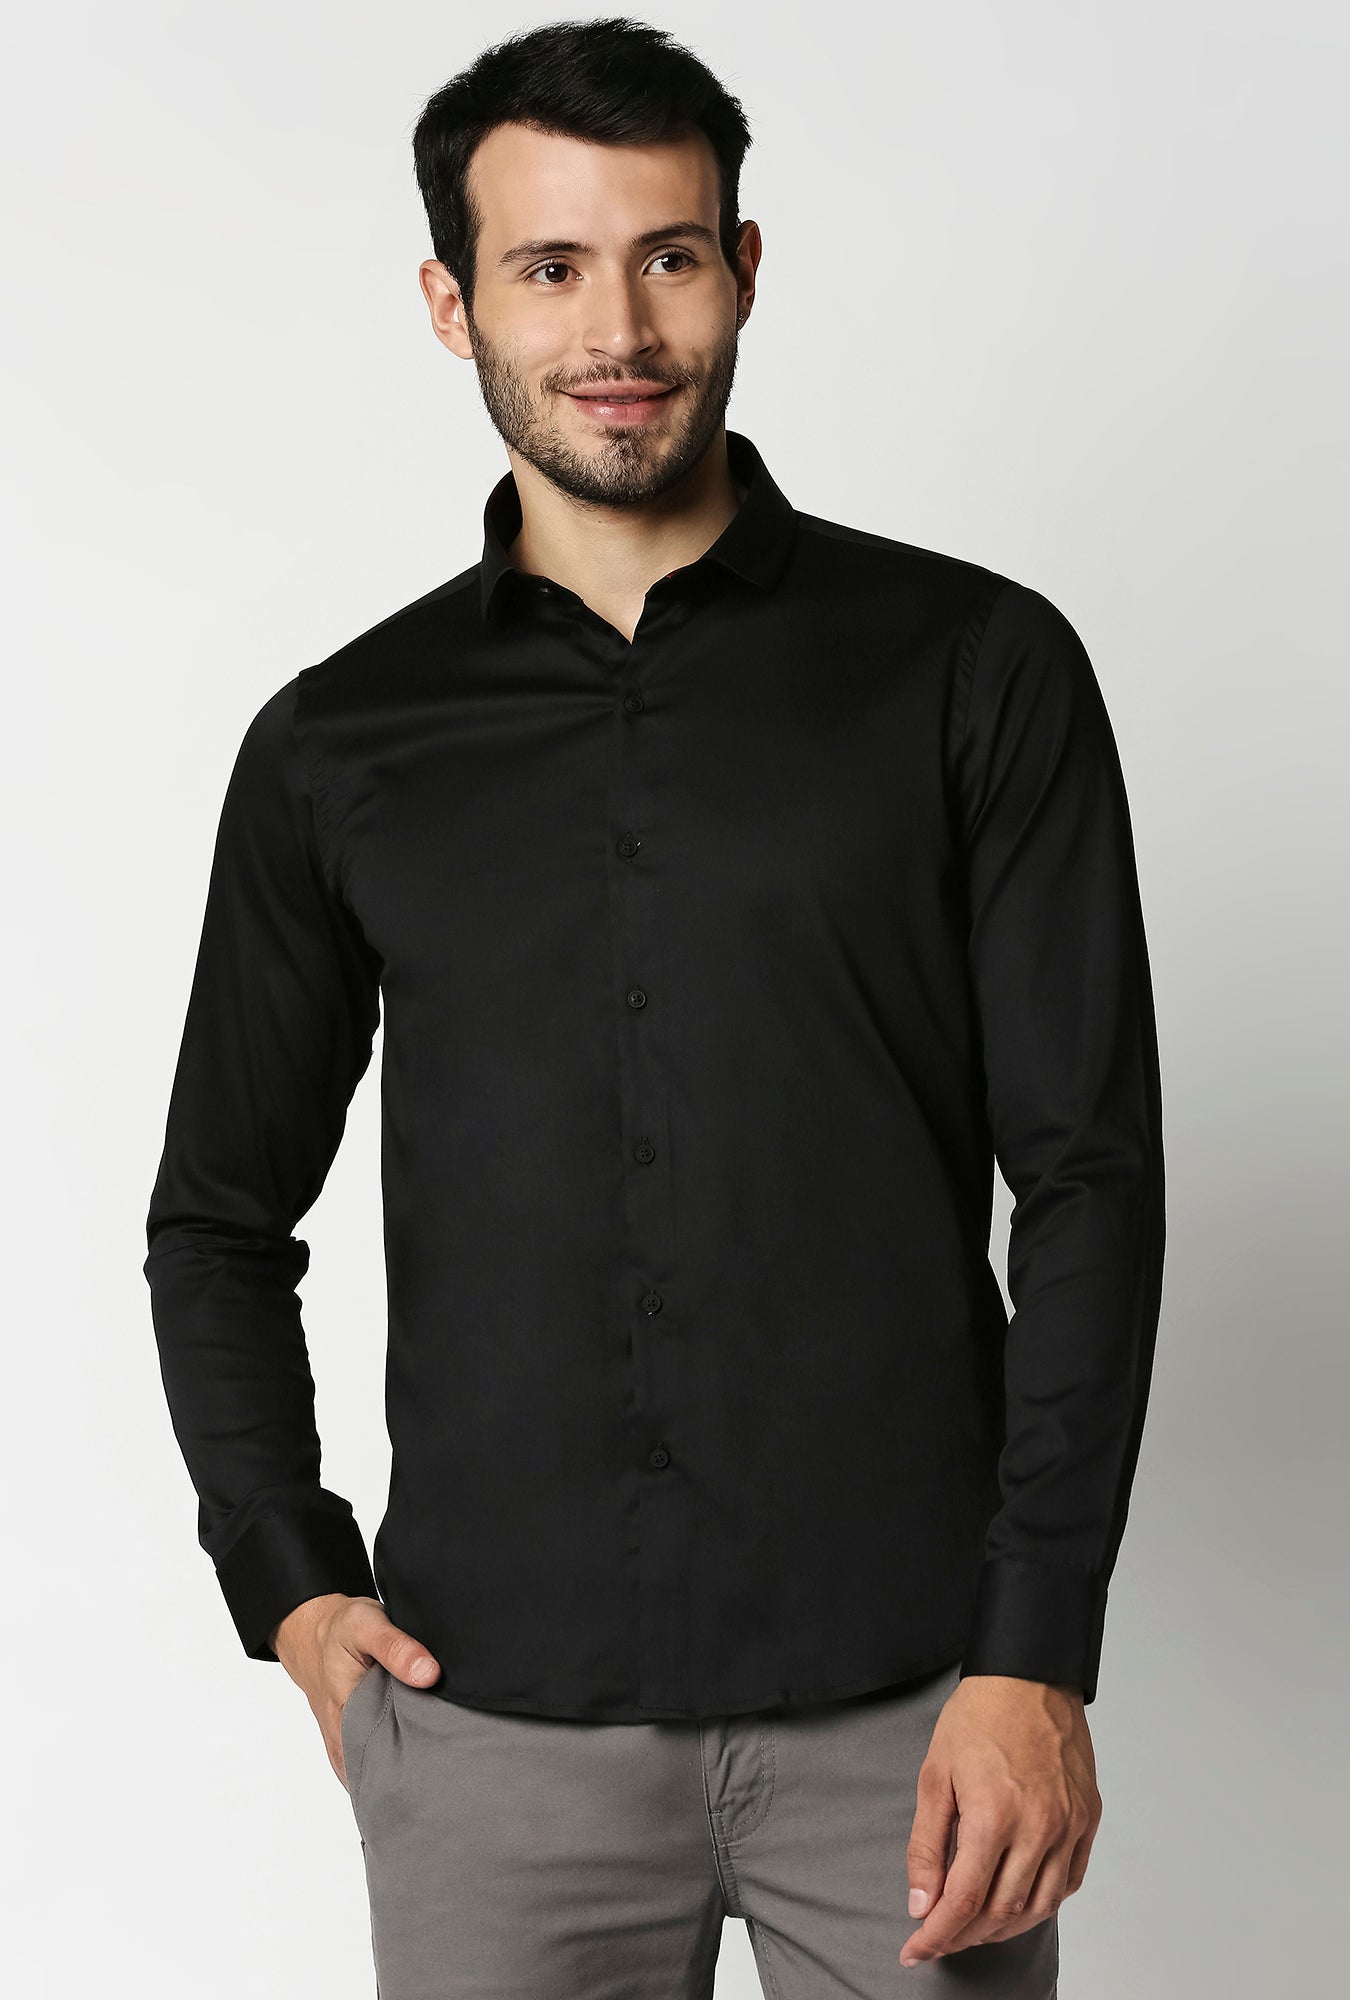 Fostino Plain Lycra Black Full Sleeves Shirt - Fostino - Shirts